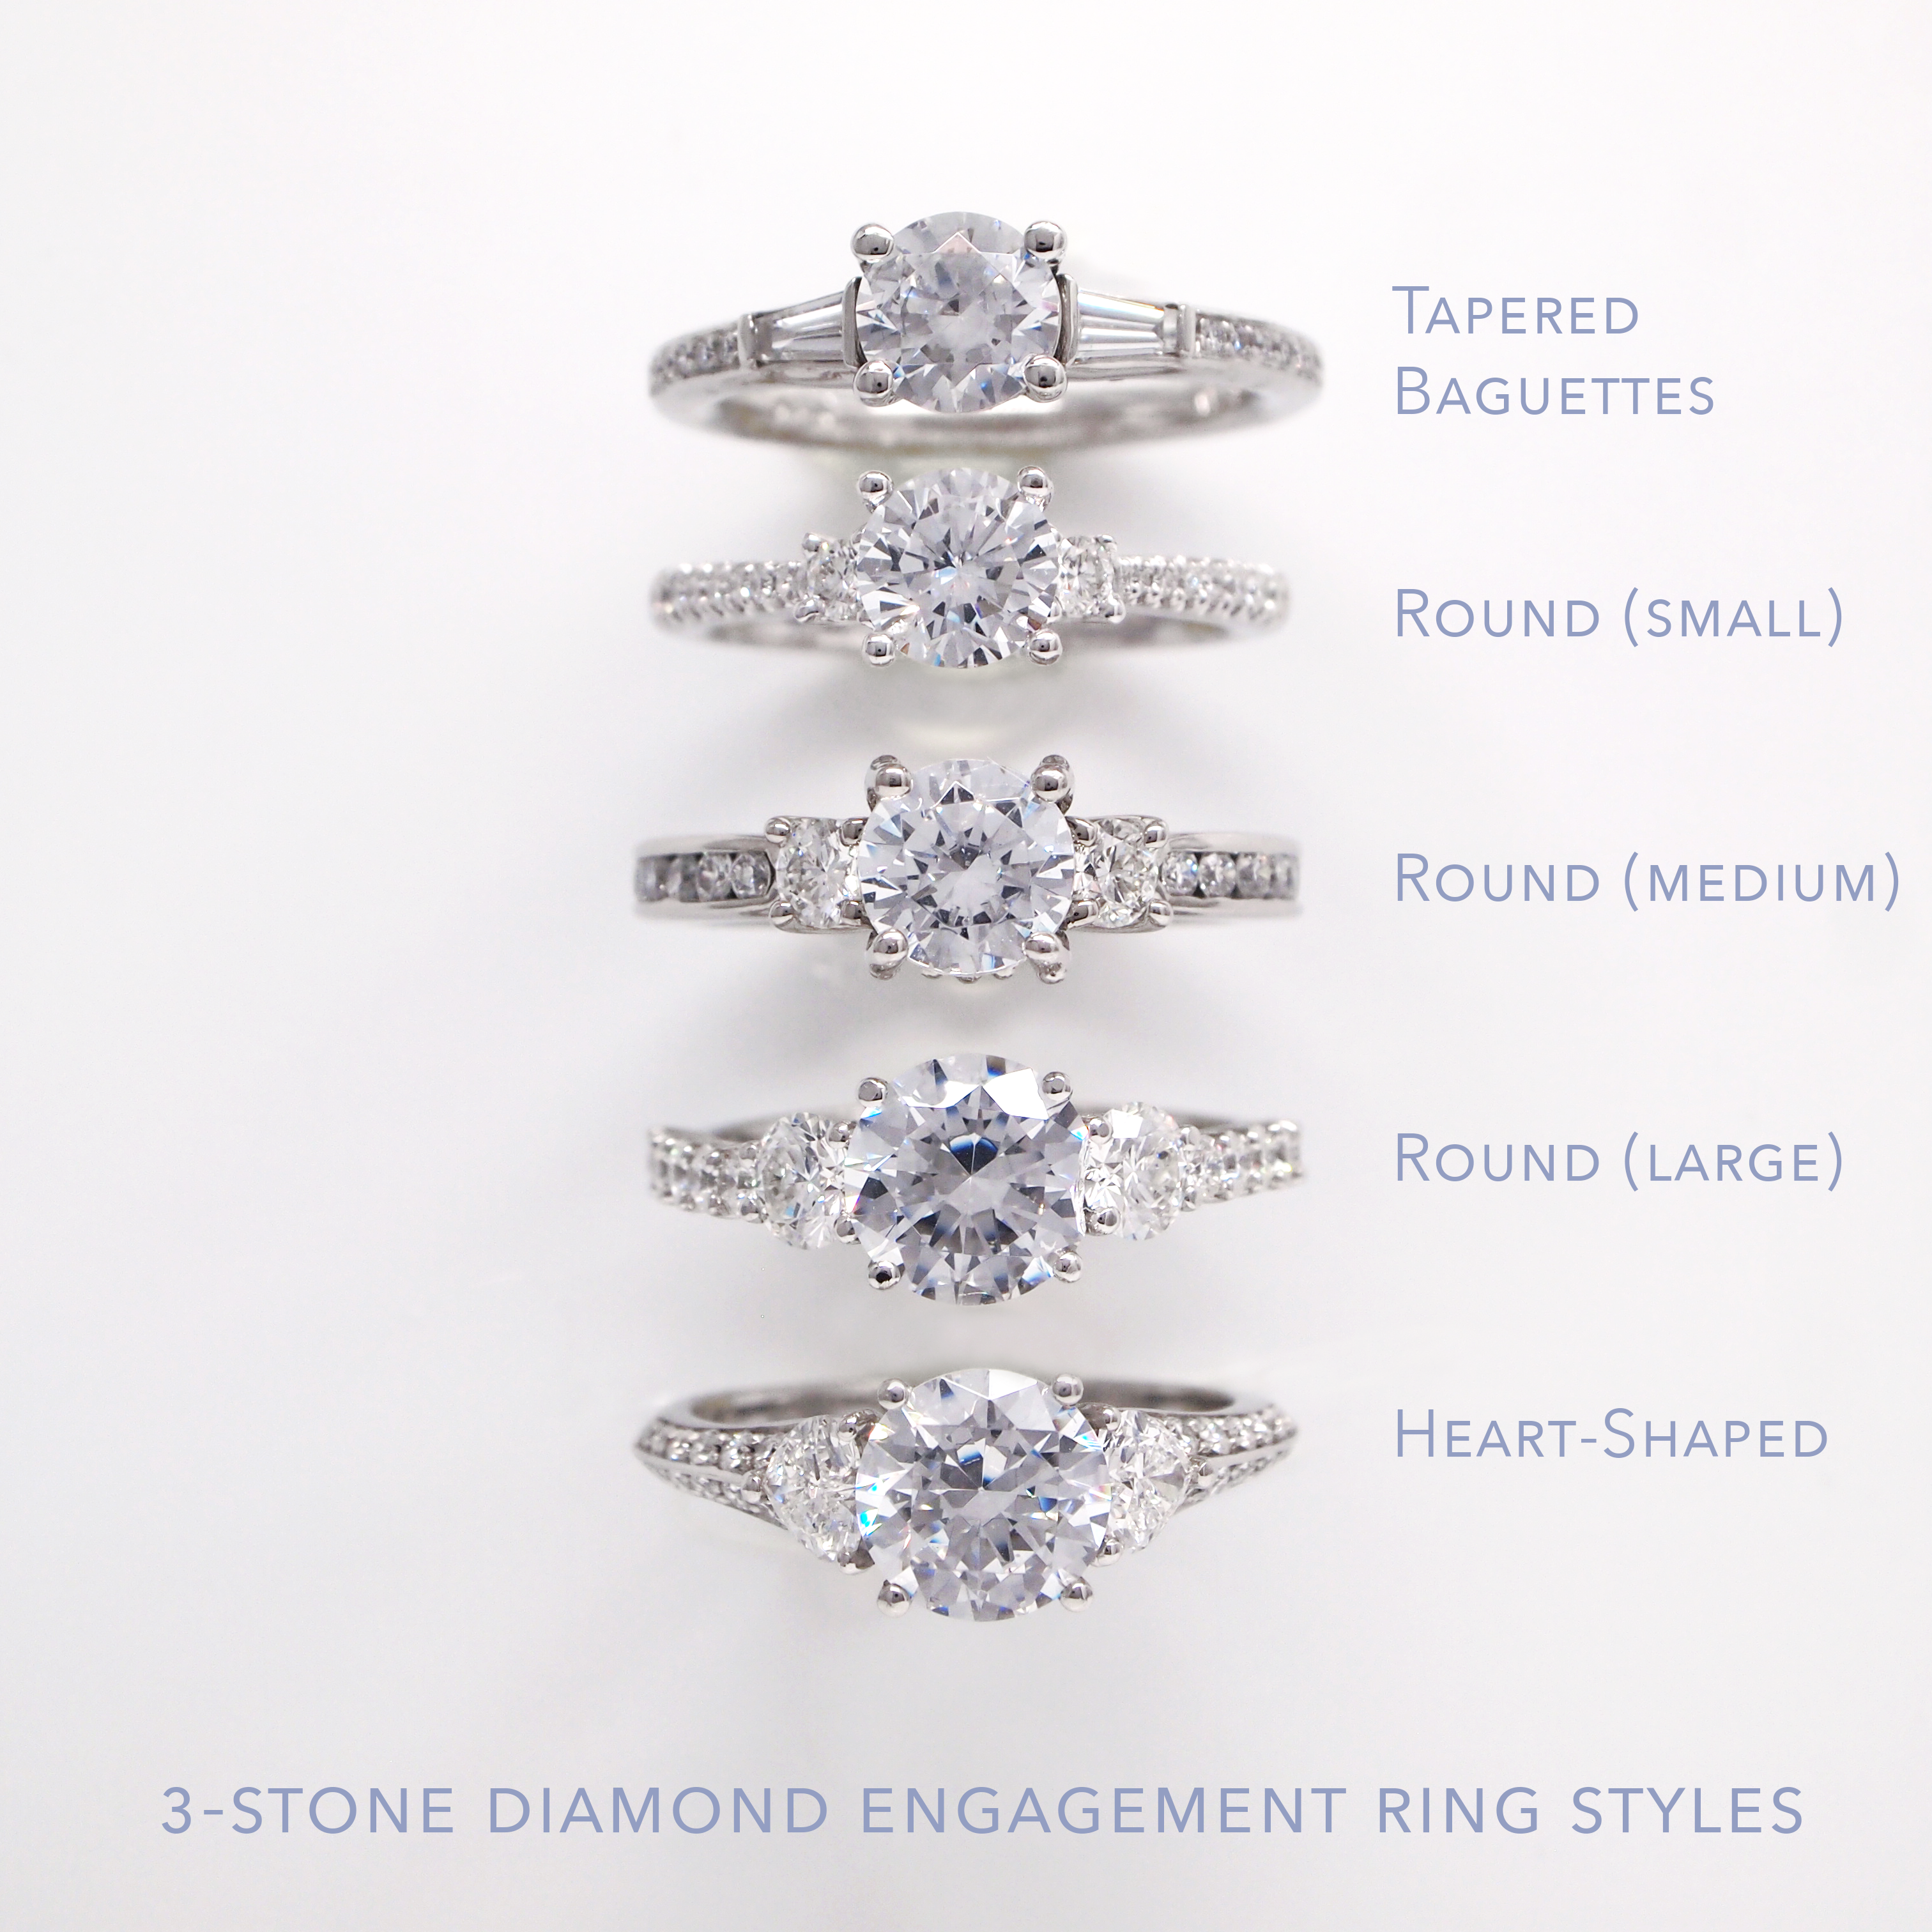 3-stone engagement ring ideas